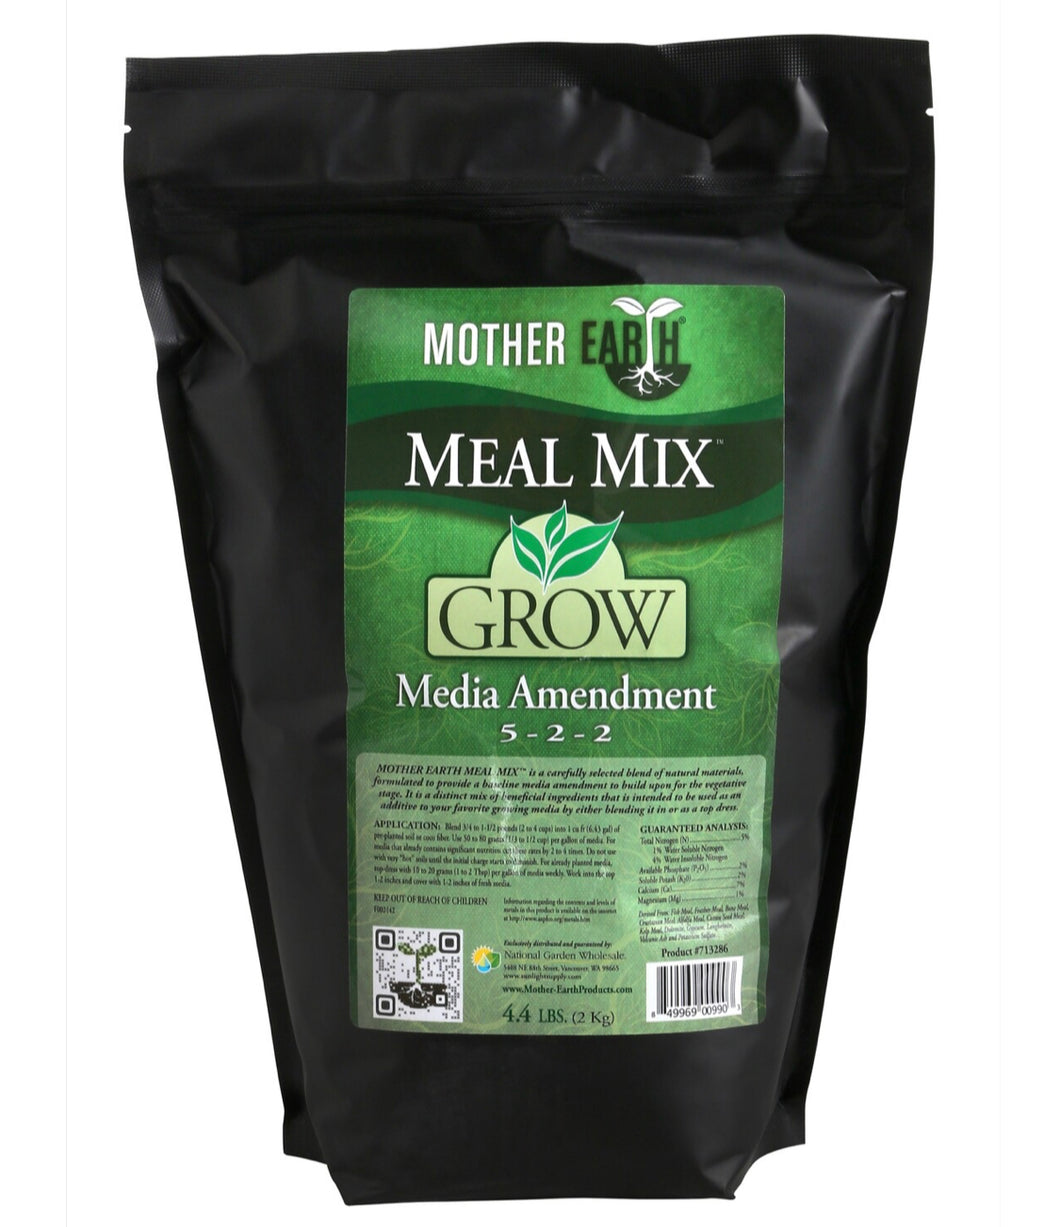 Mother Earth Meal Mix Grow Media Amendment 5-2-2